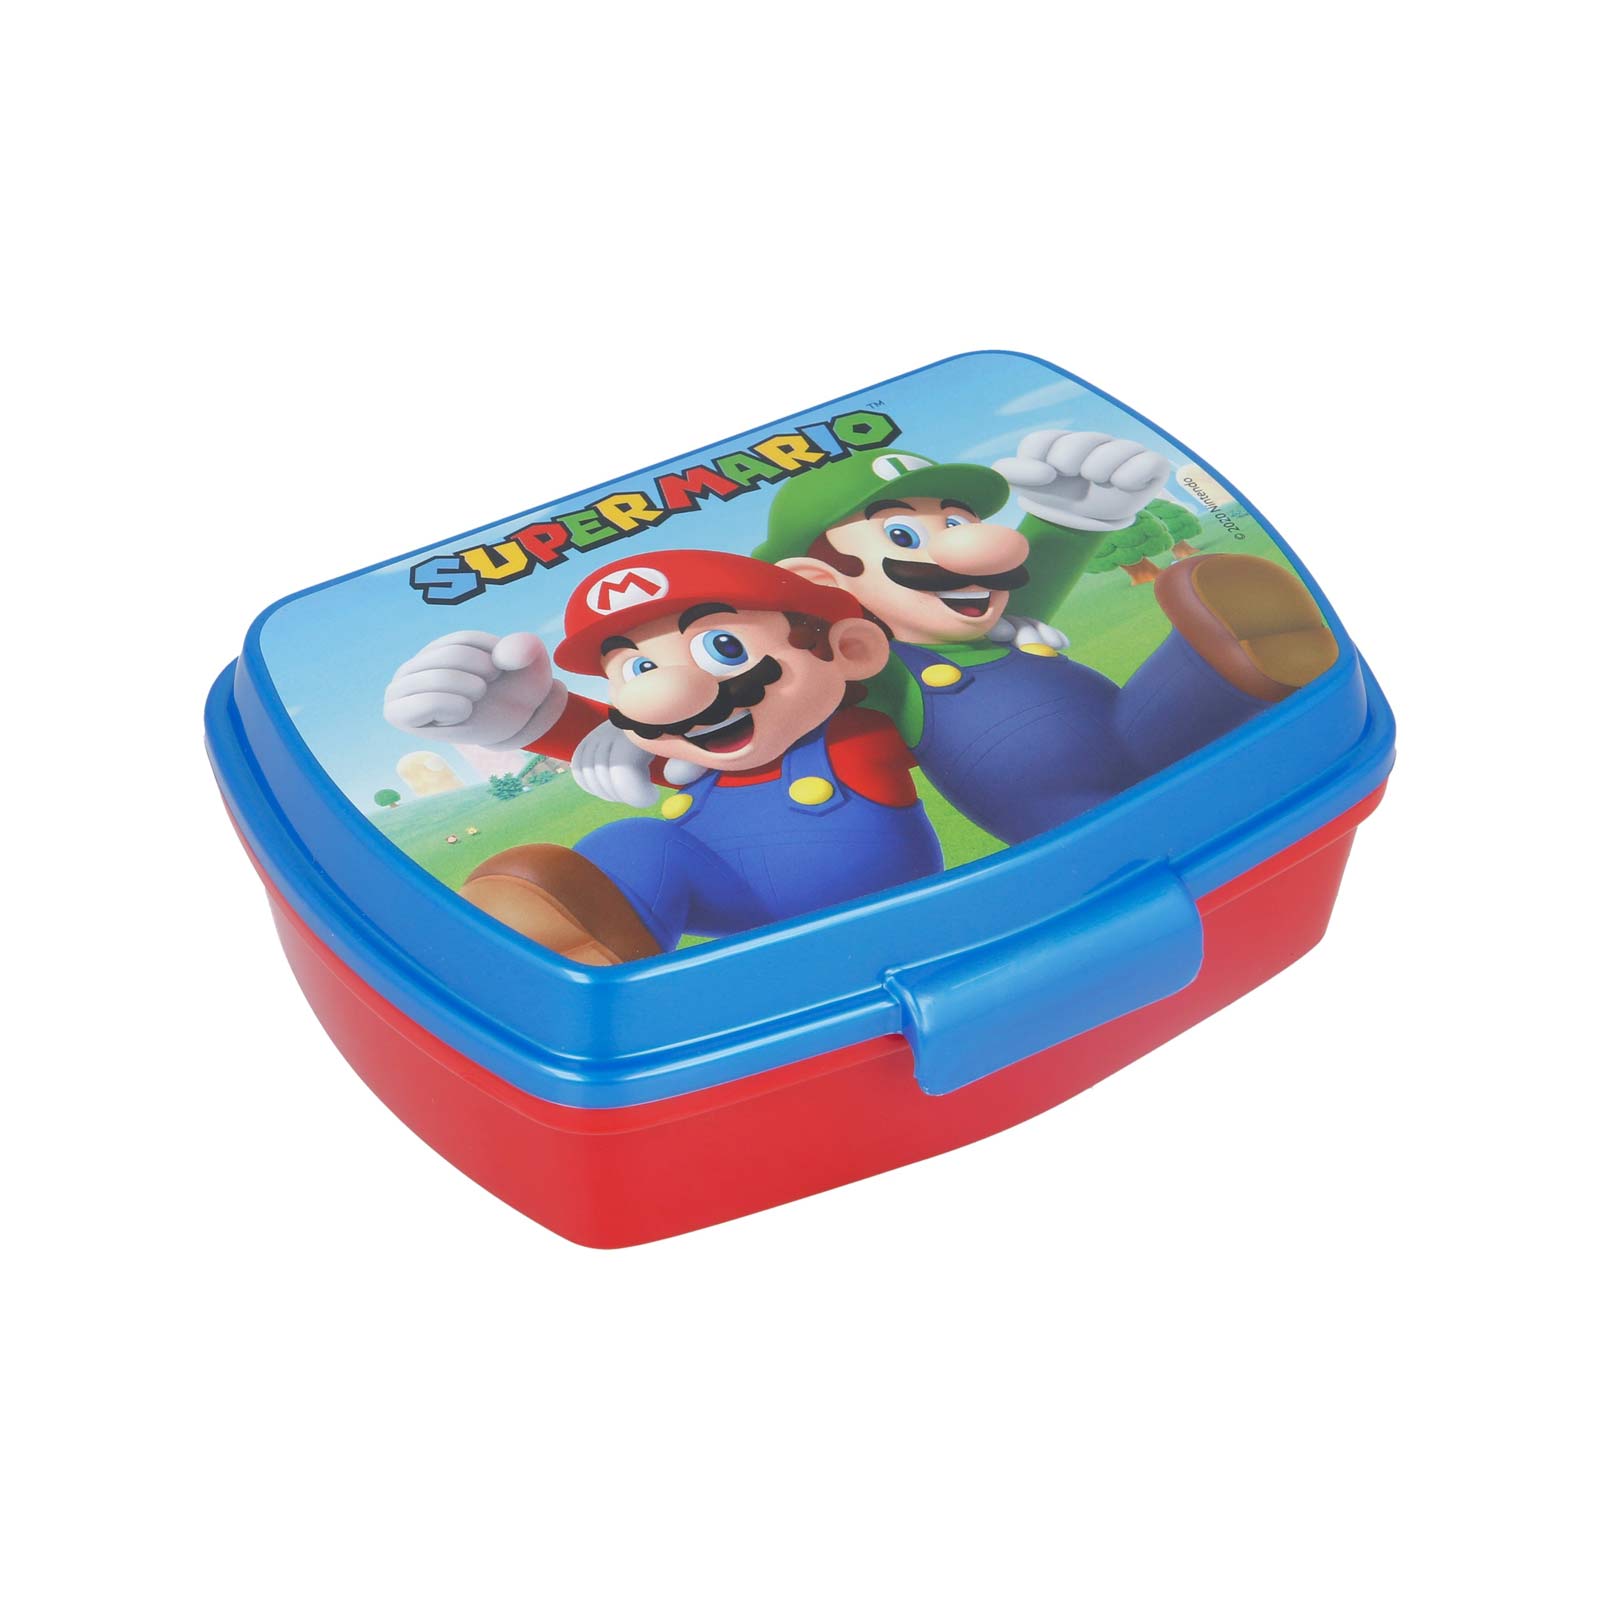 Stor Super Mario Lunchbox Mario & Luigi - A 